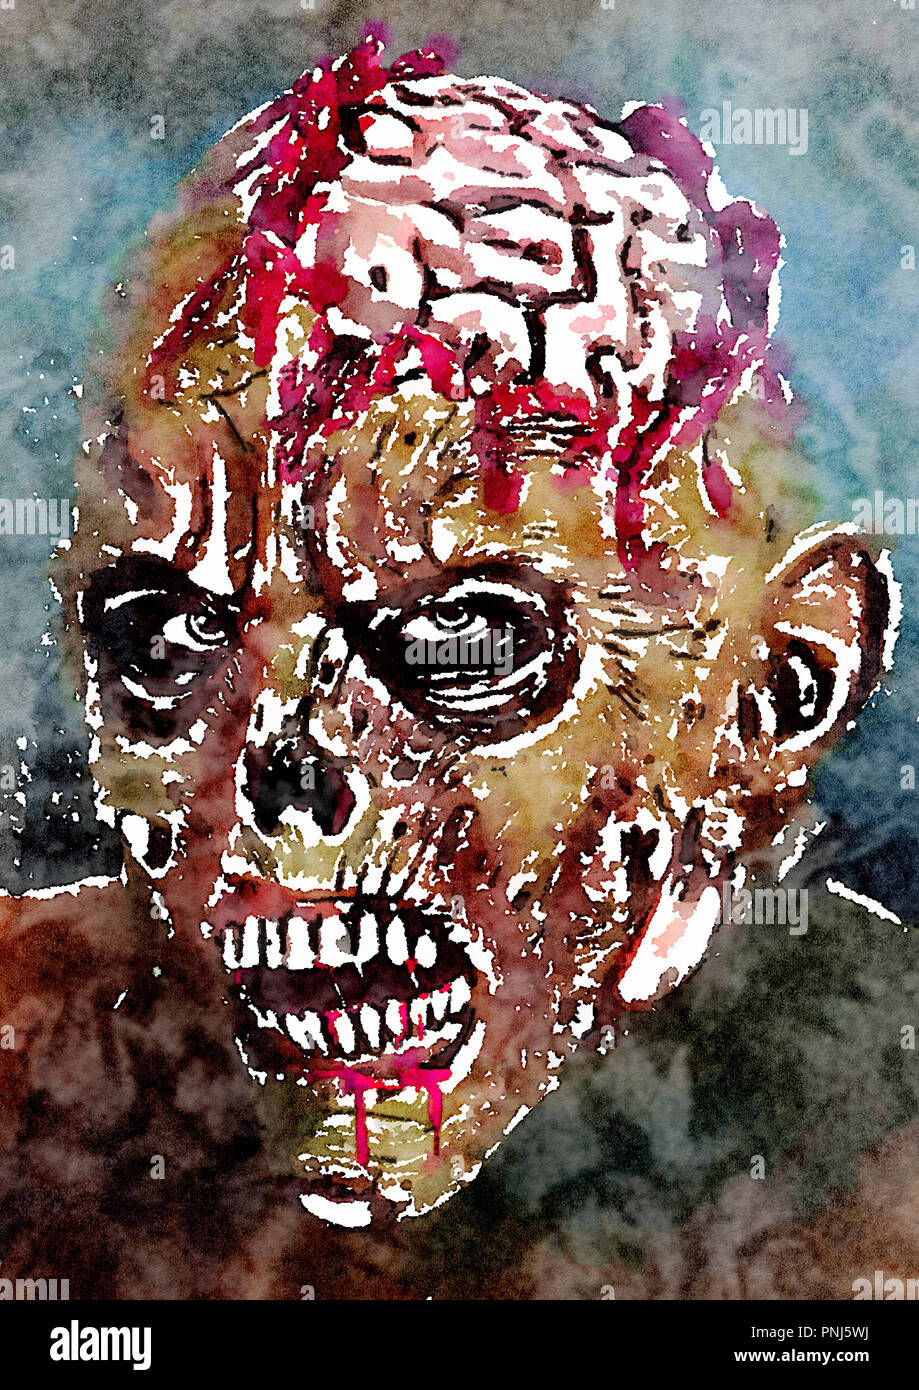 zombie undead illustration Stock Photo